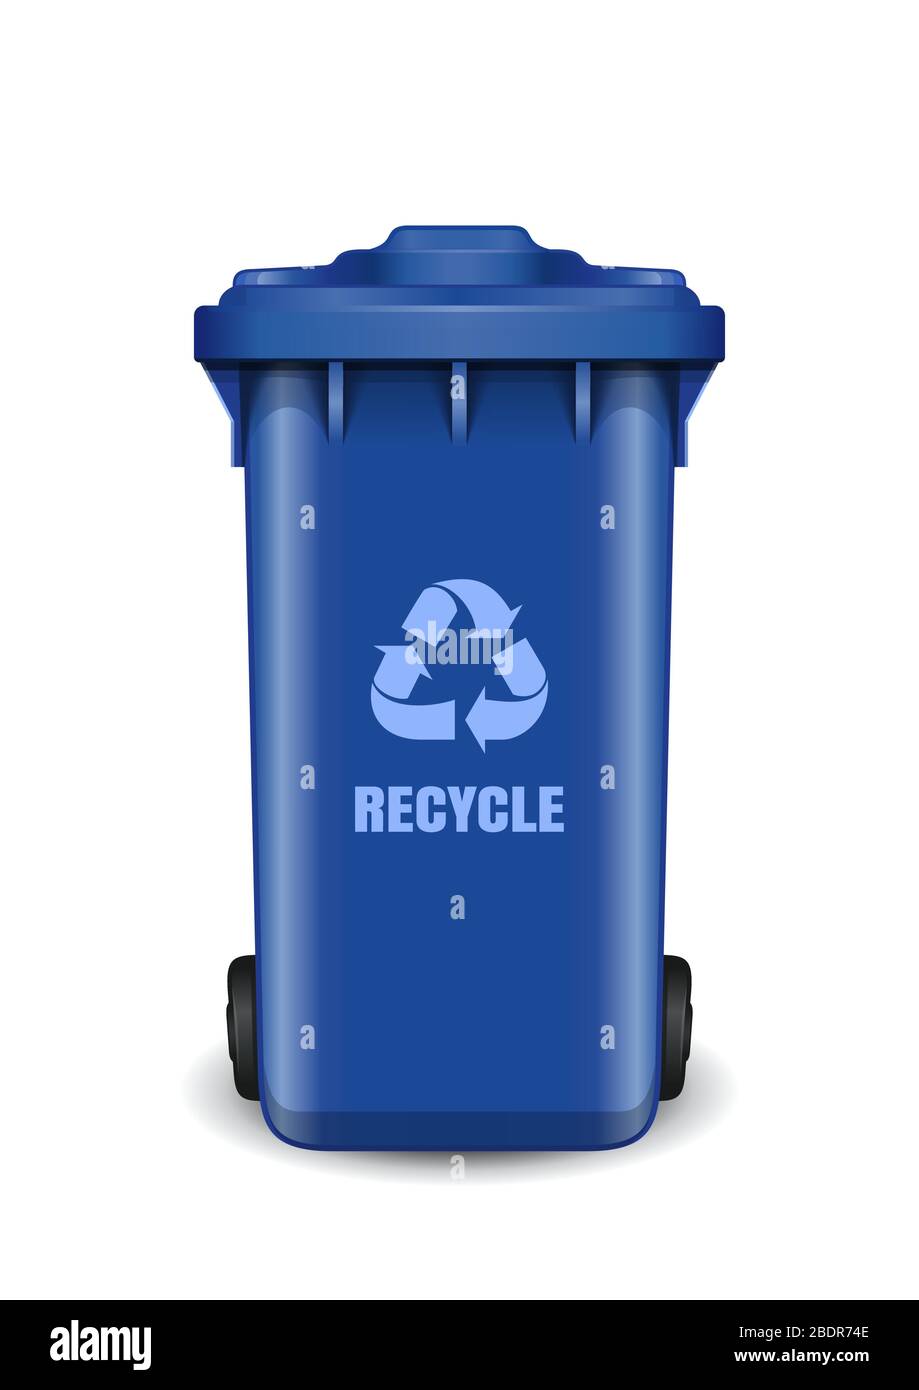 Bote de basura azul con sãmbolo de reciclaje de riduos imagen vector de stock